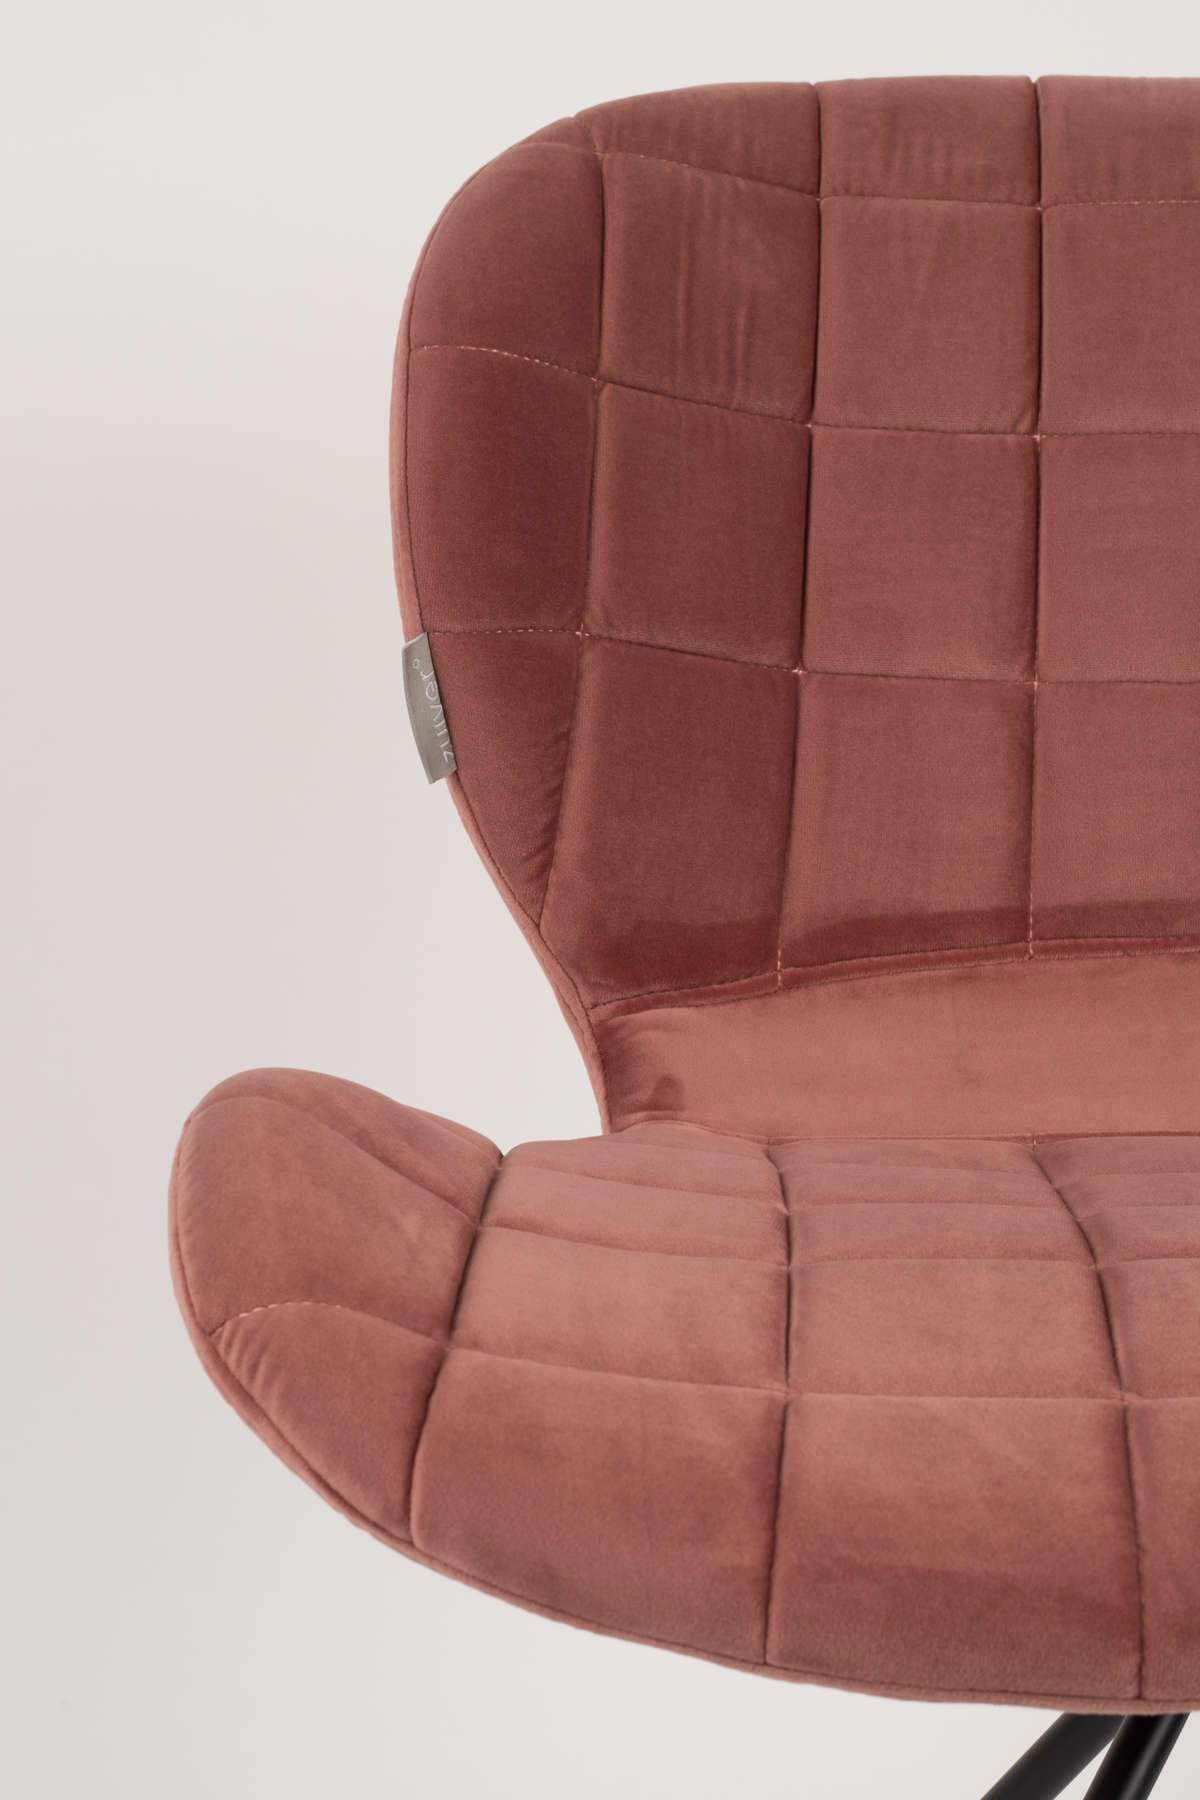 Krzesło OMG VELVET różowy - Eye on Design